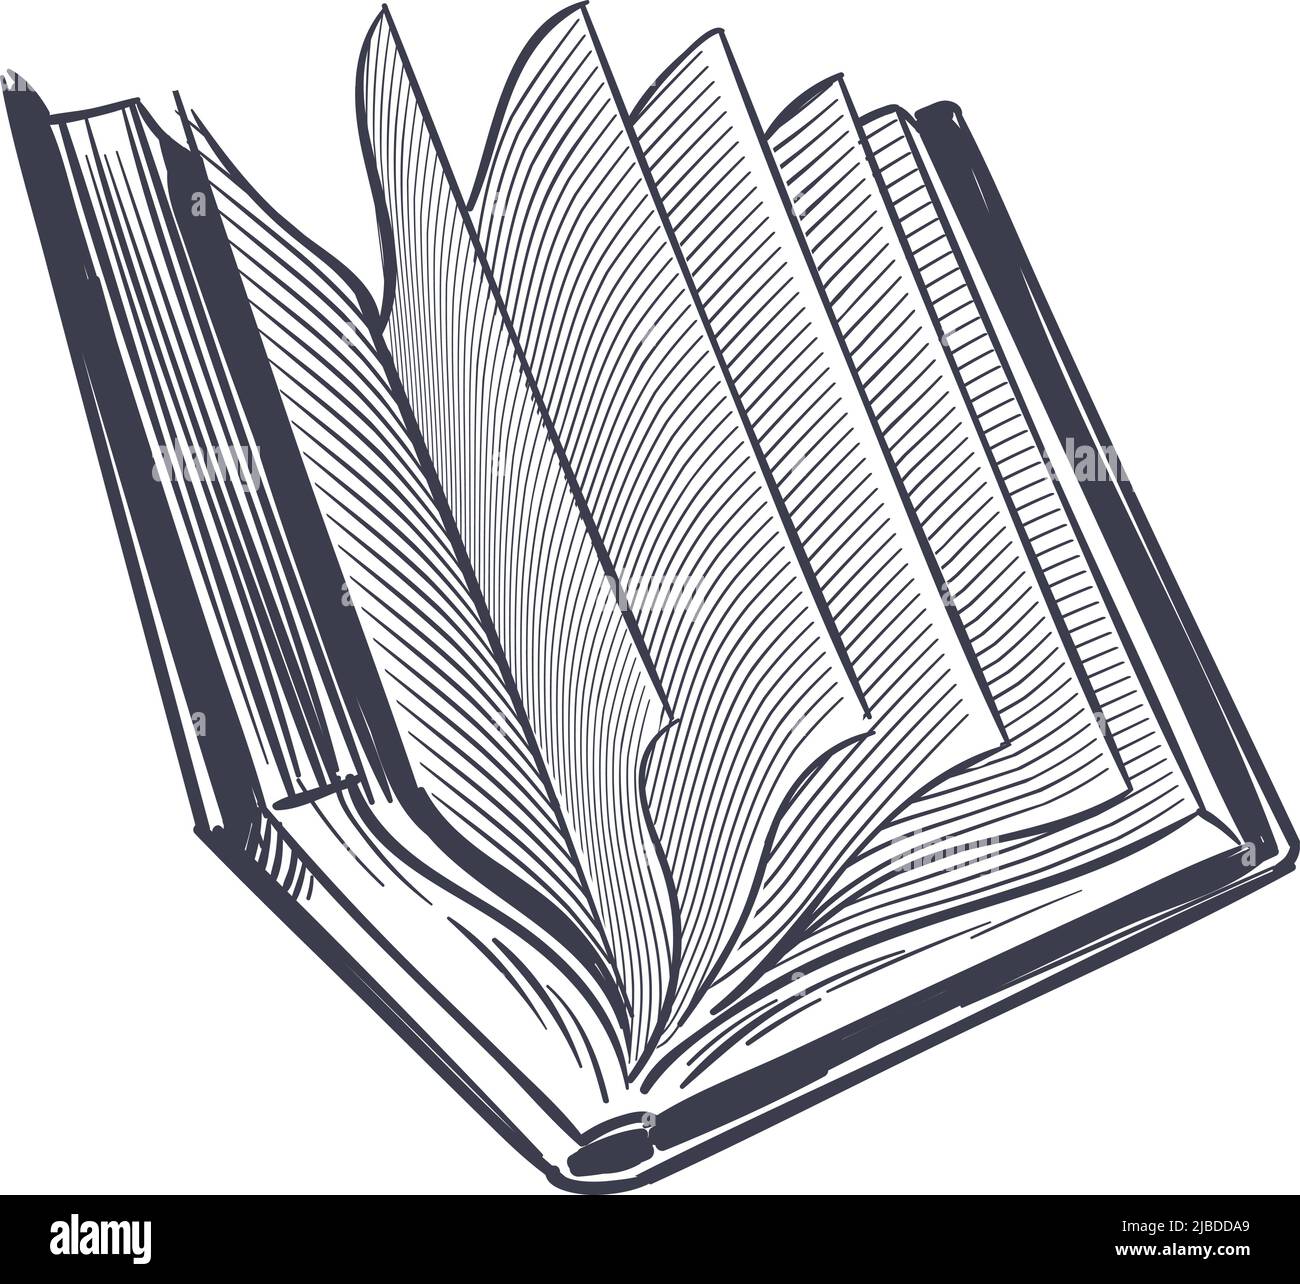 open book design black drawing - Stock Illustration [25156539] - PIXTA